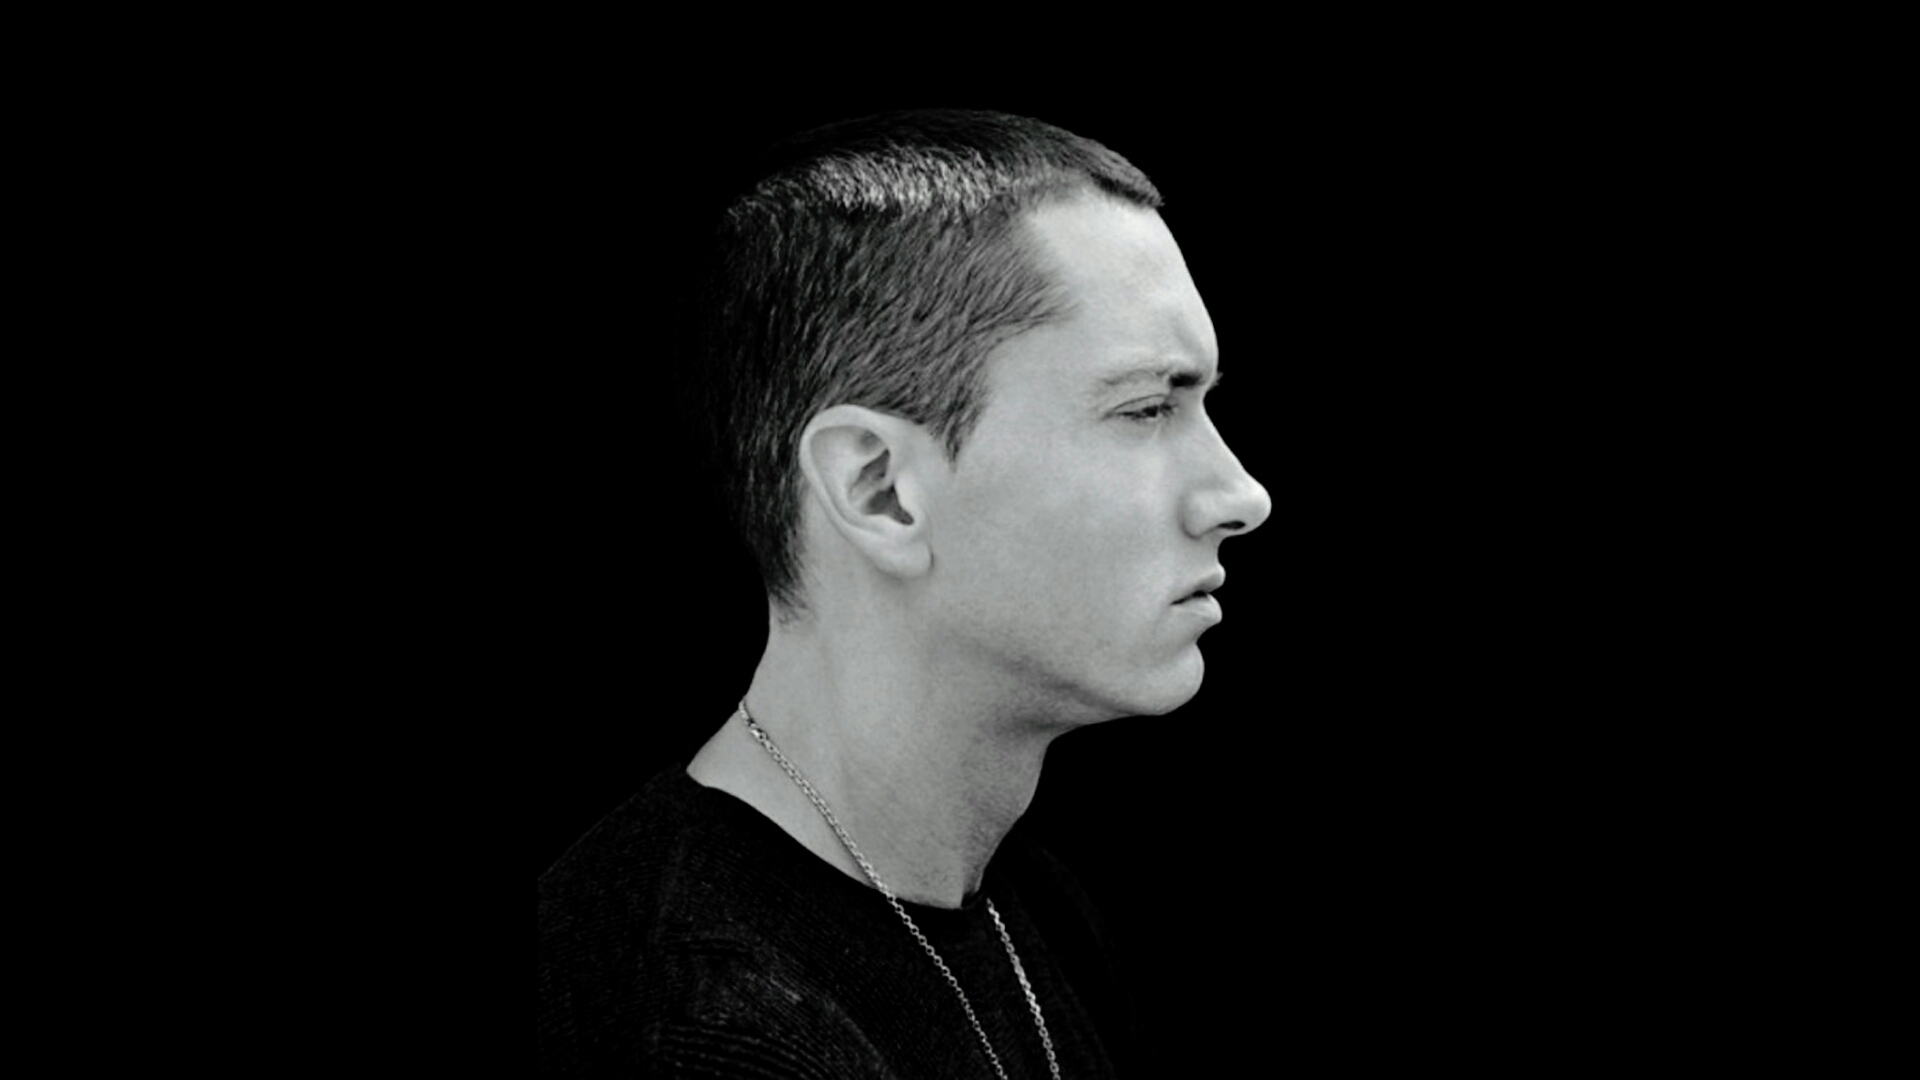 Eminem Wallpapers Backgrounds Free Download 